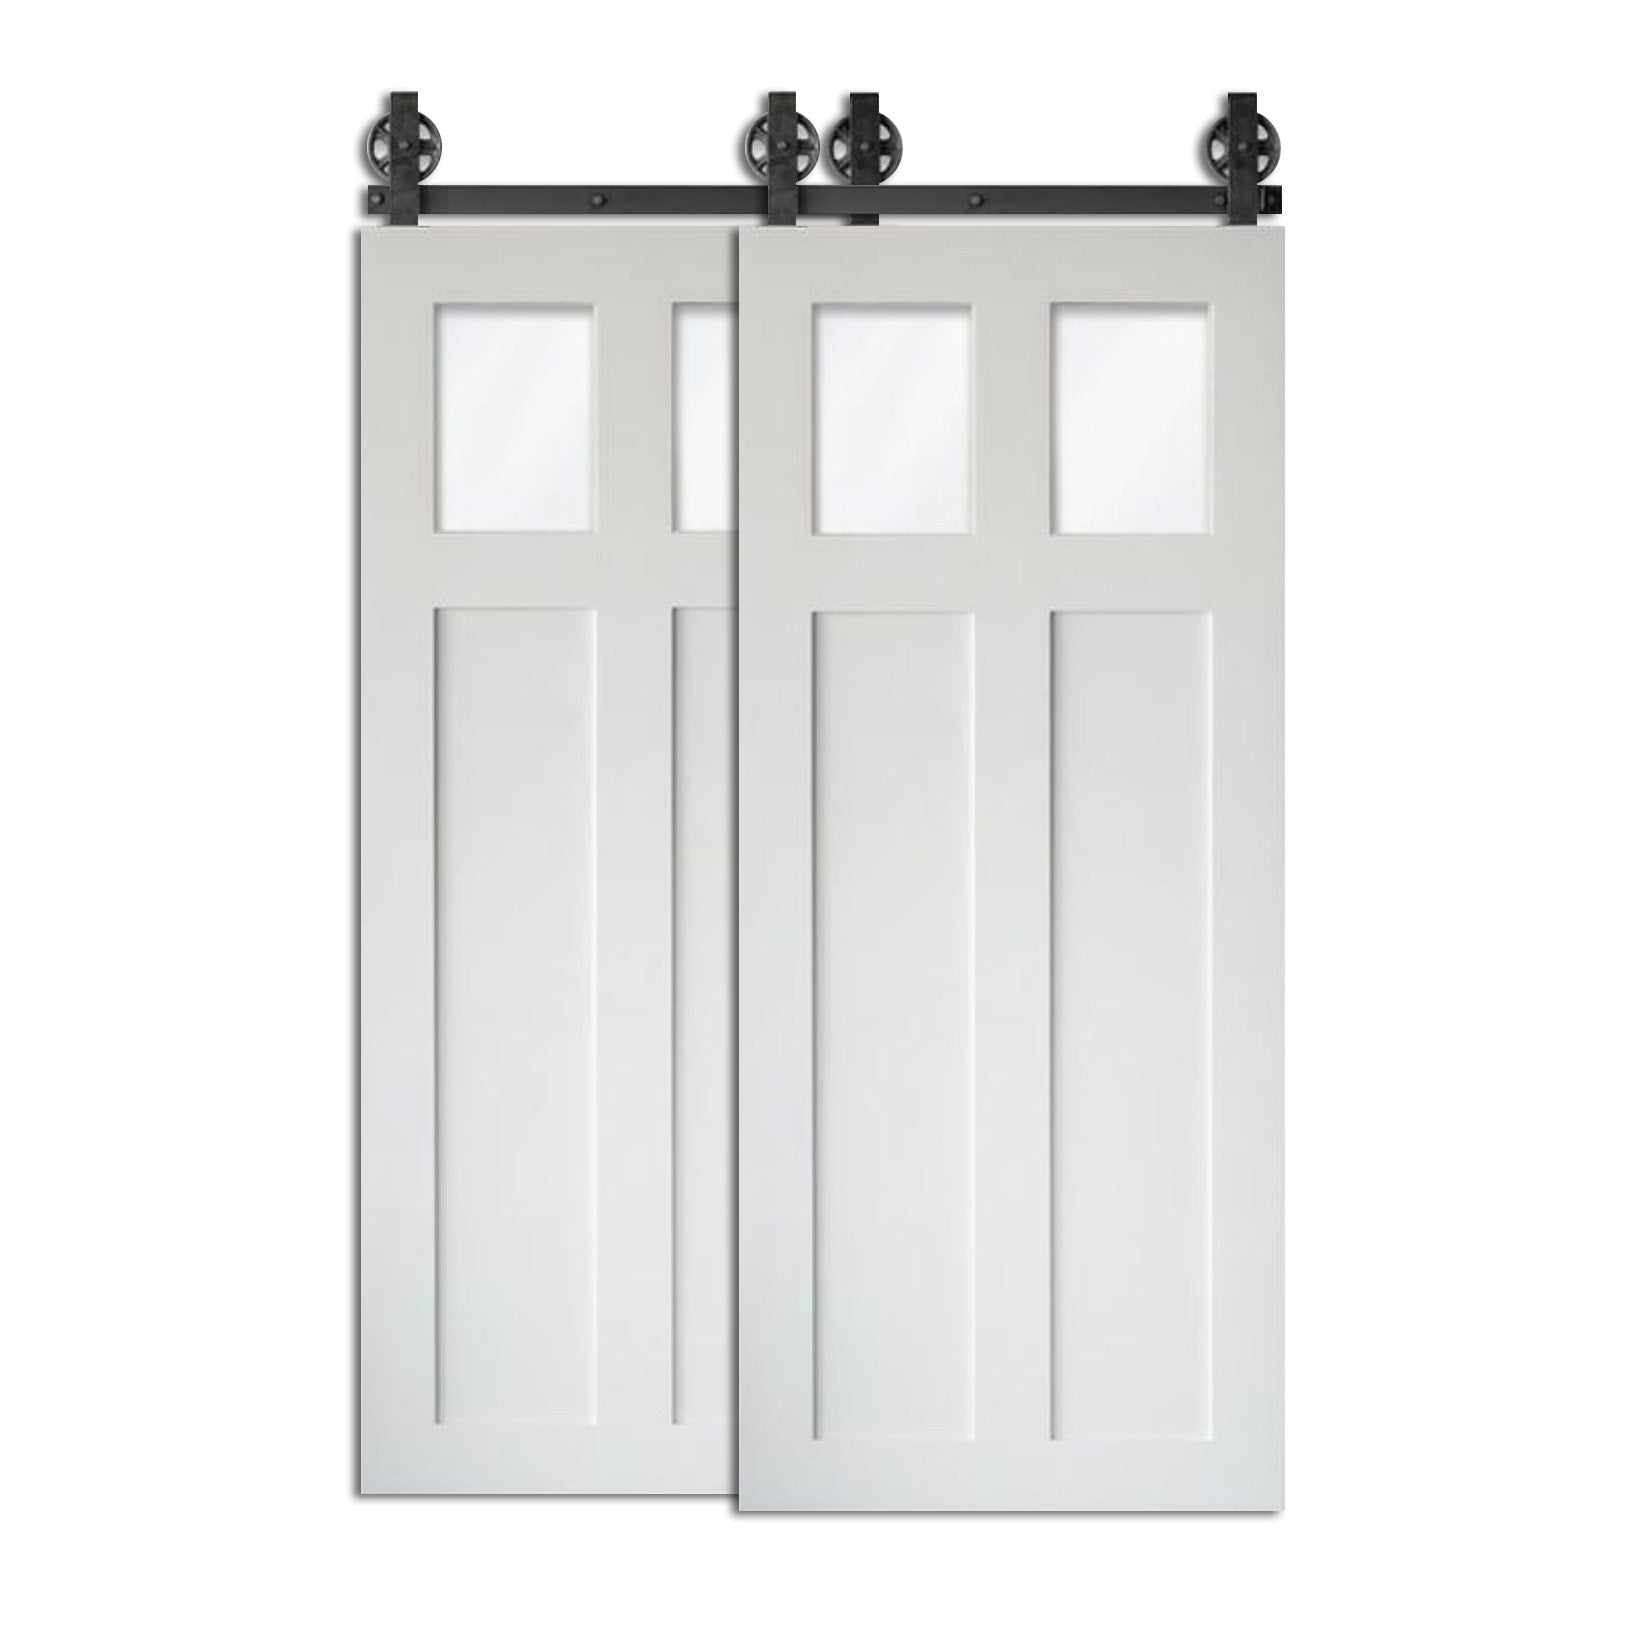 Tilas - 4 Glass Panels Bypass Double Sliding Barn Doors